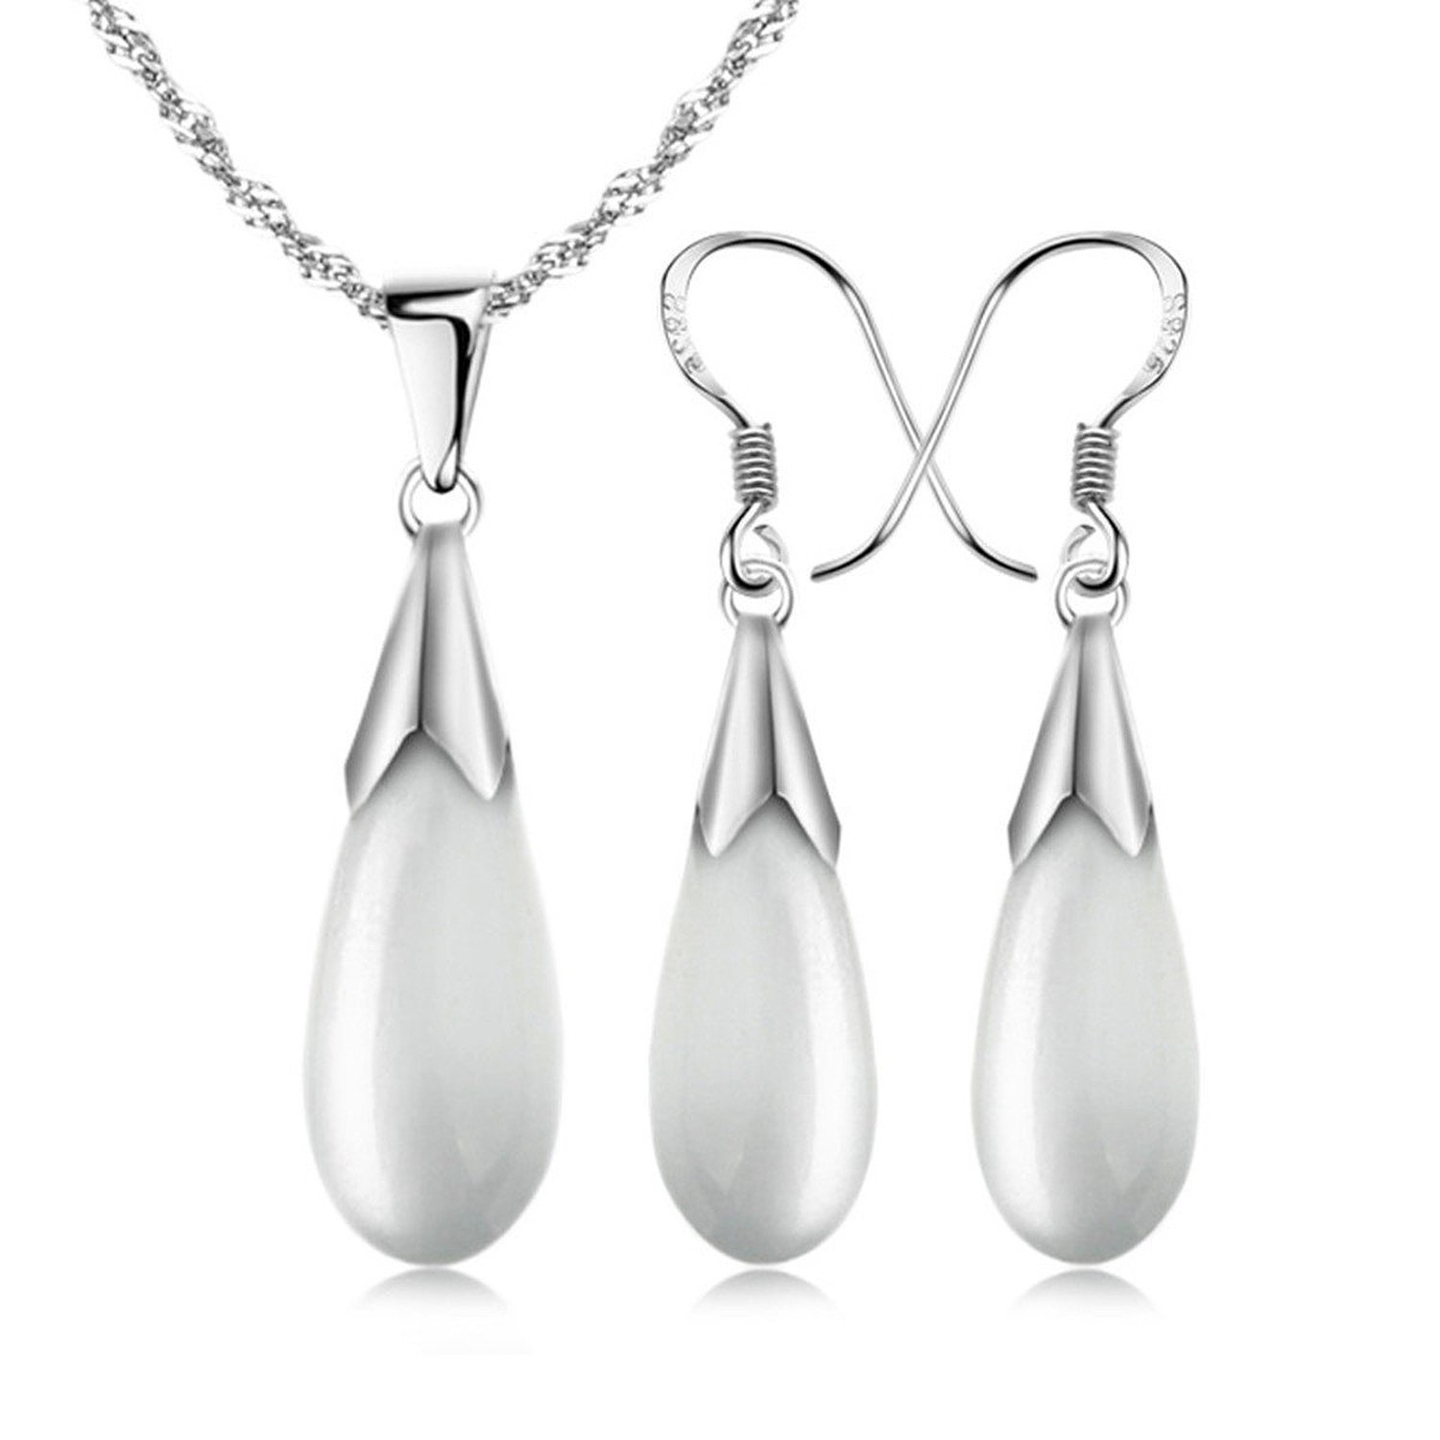 Ashiana 925 Sterling-Silver White Elegant Water-drop Cats Eye Pendant and Earrings set